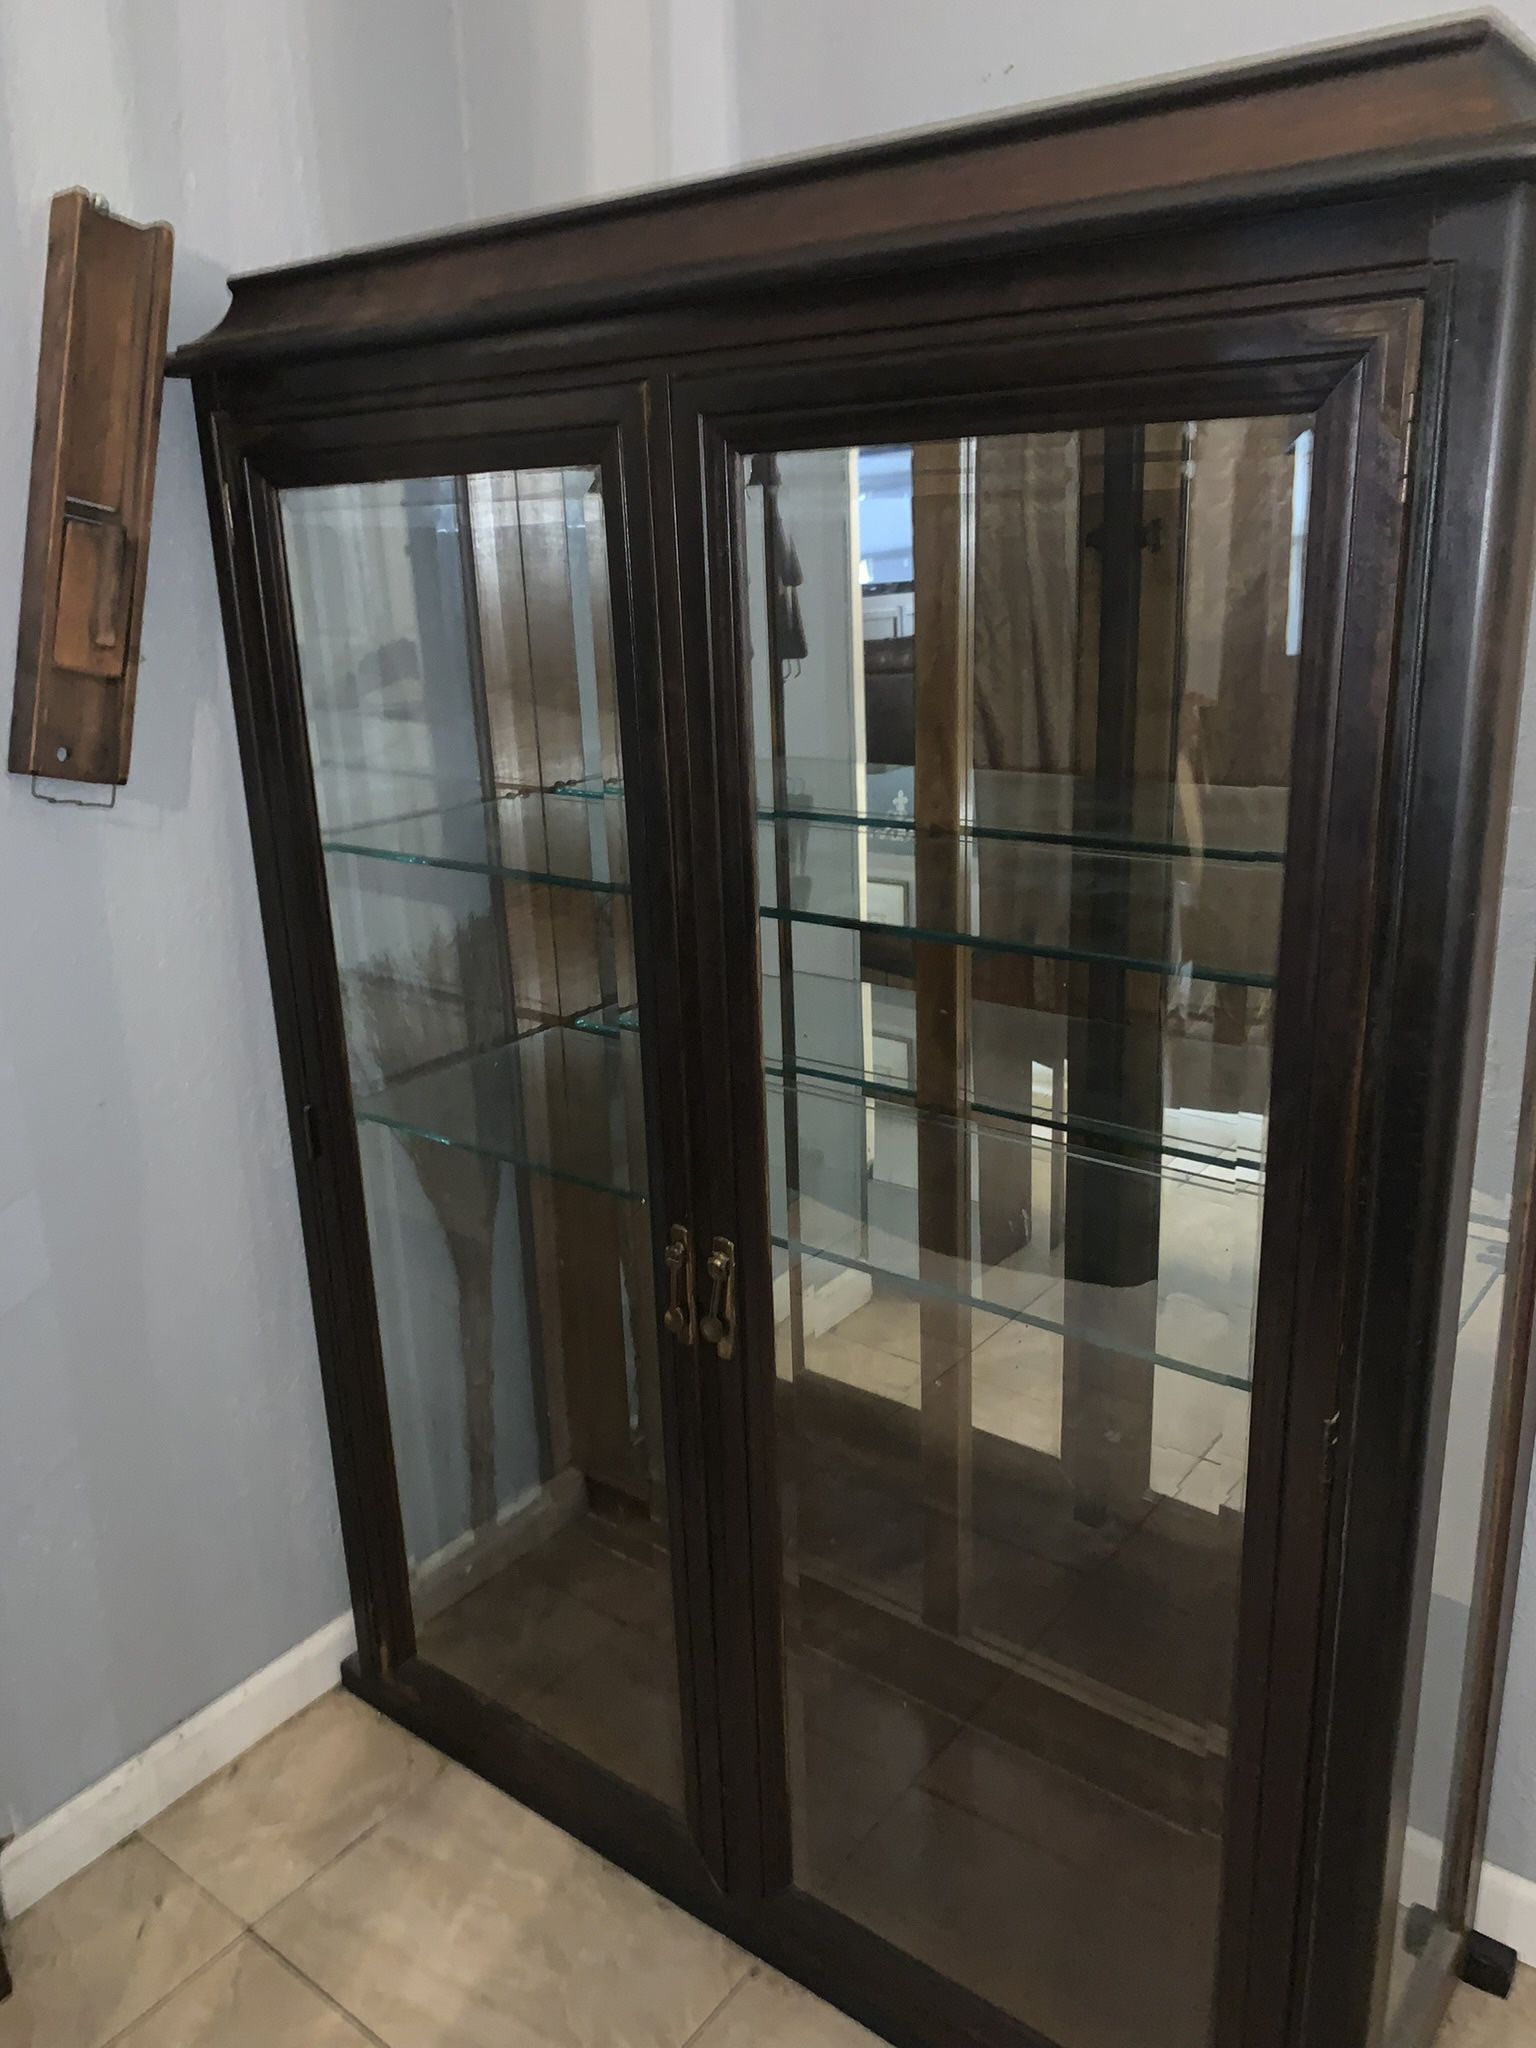 Antique Curio Cabinet With Glass Shelves